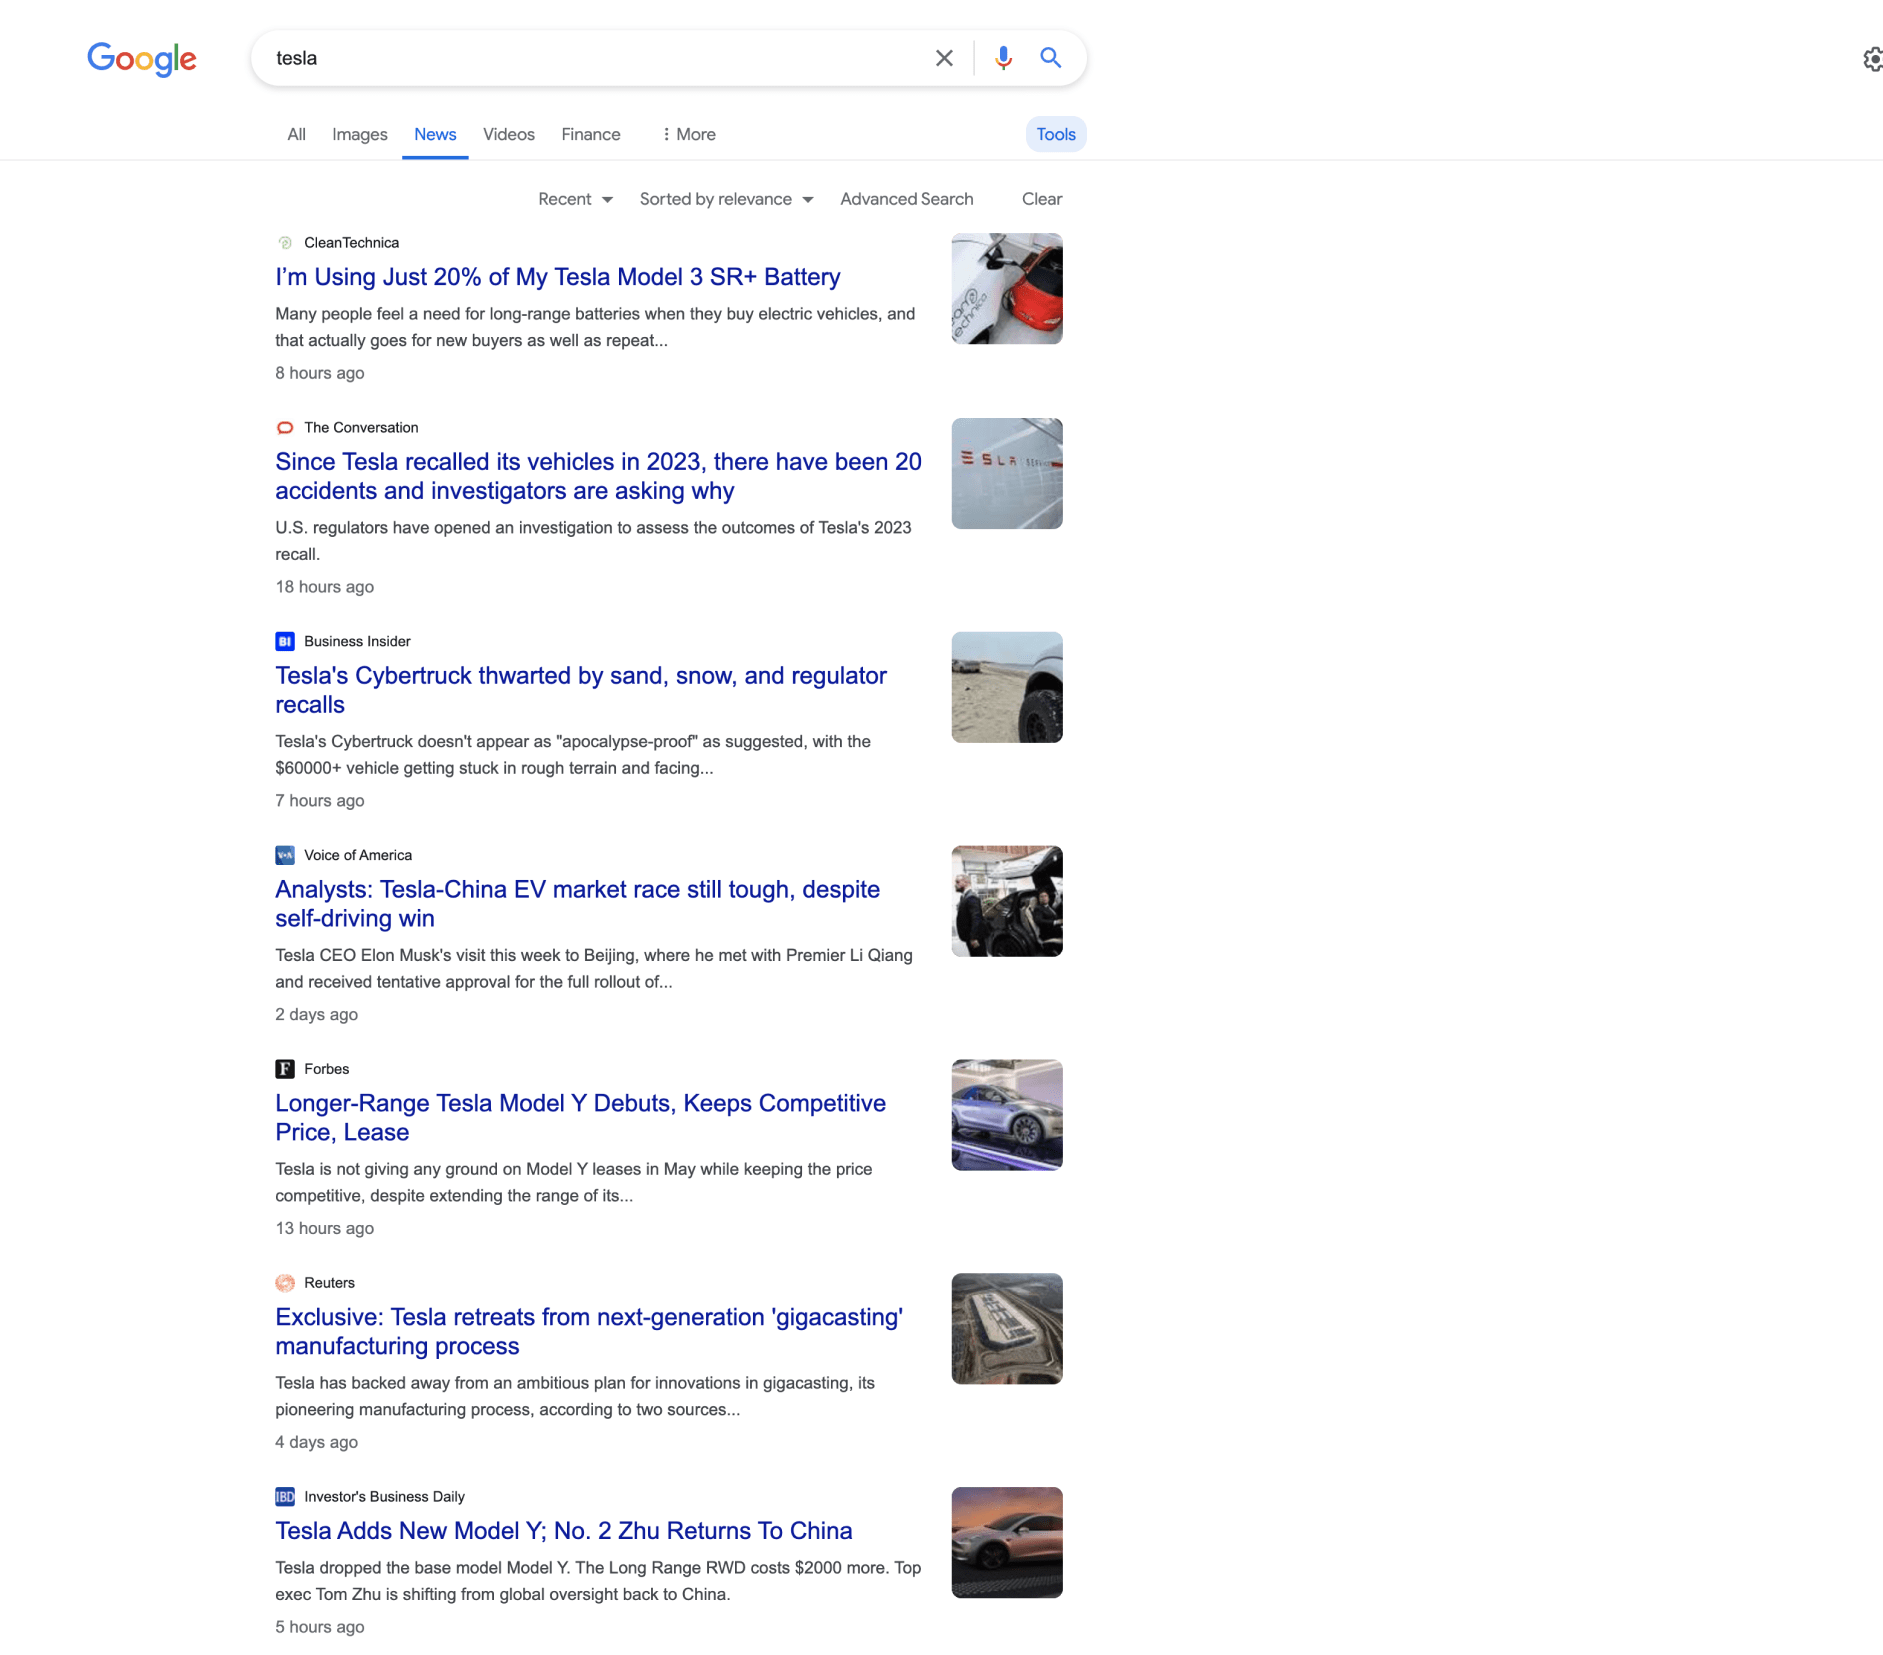 Google News Scraper